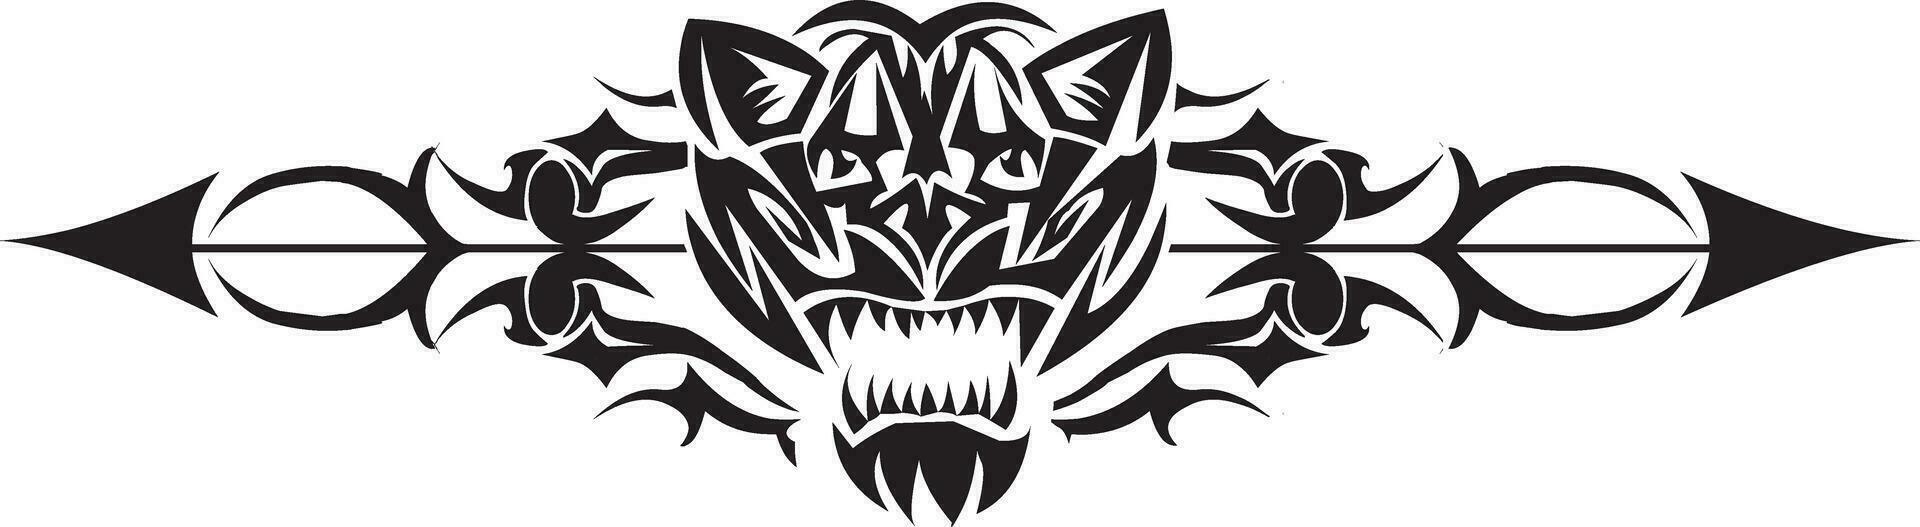 Tattoo design of wild cat, vintage engraving. vector